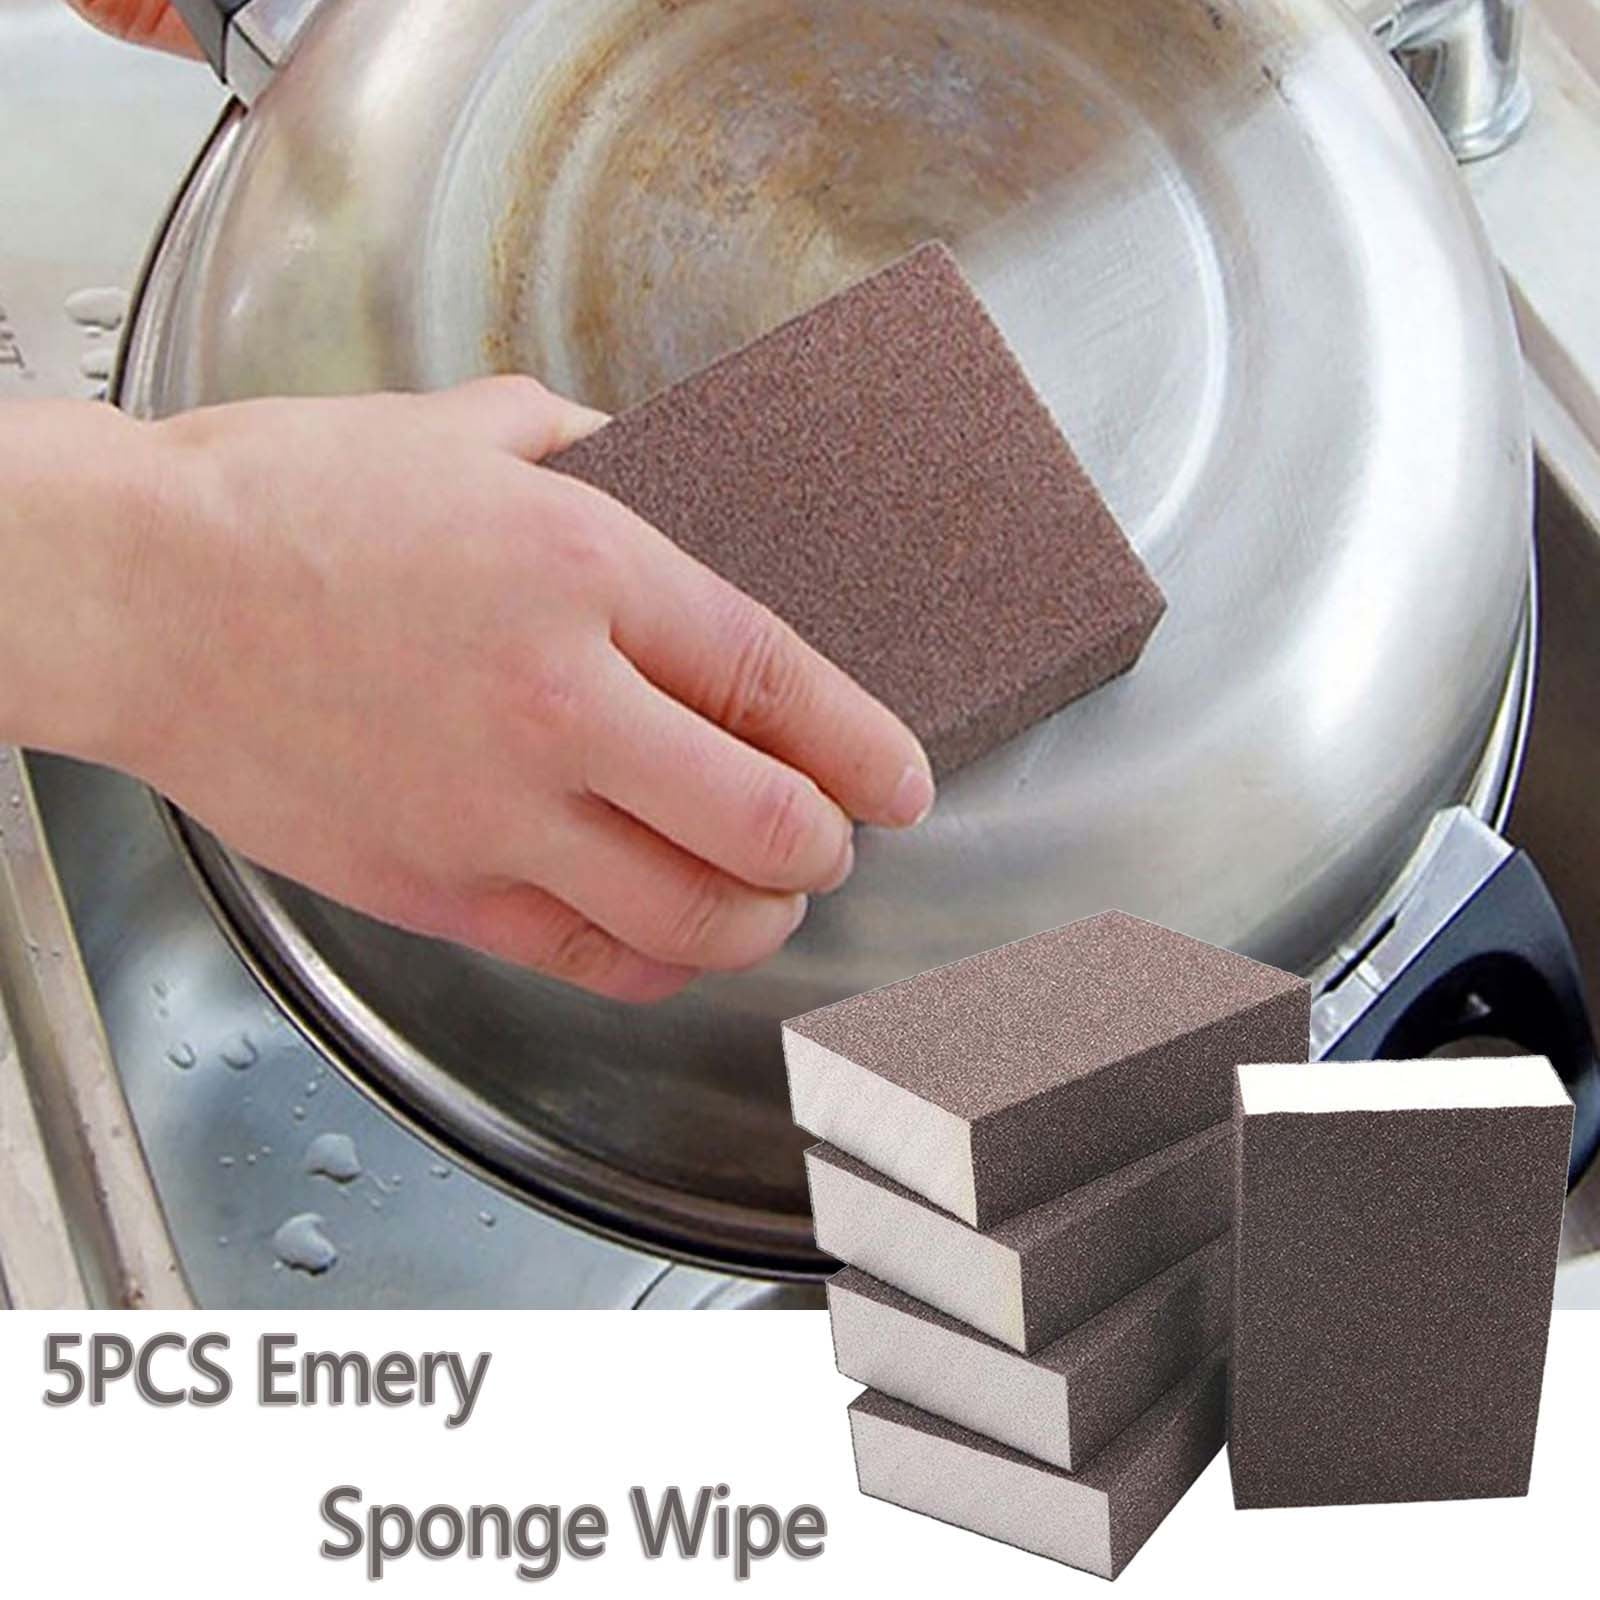 5Pcs Magic Nano Emery Sponge Brush Home Kitchen Cleaning Sponge Rust Clean Tools 